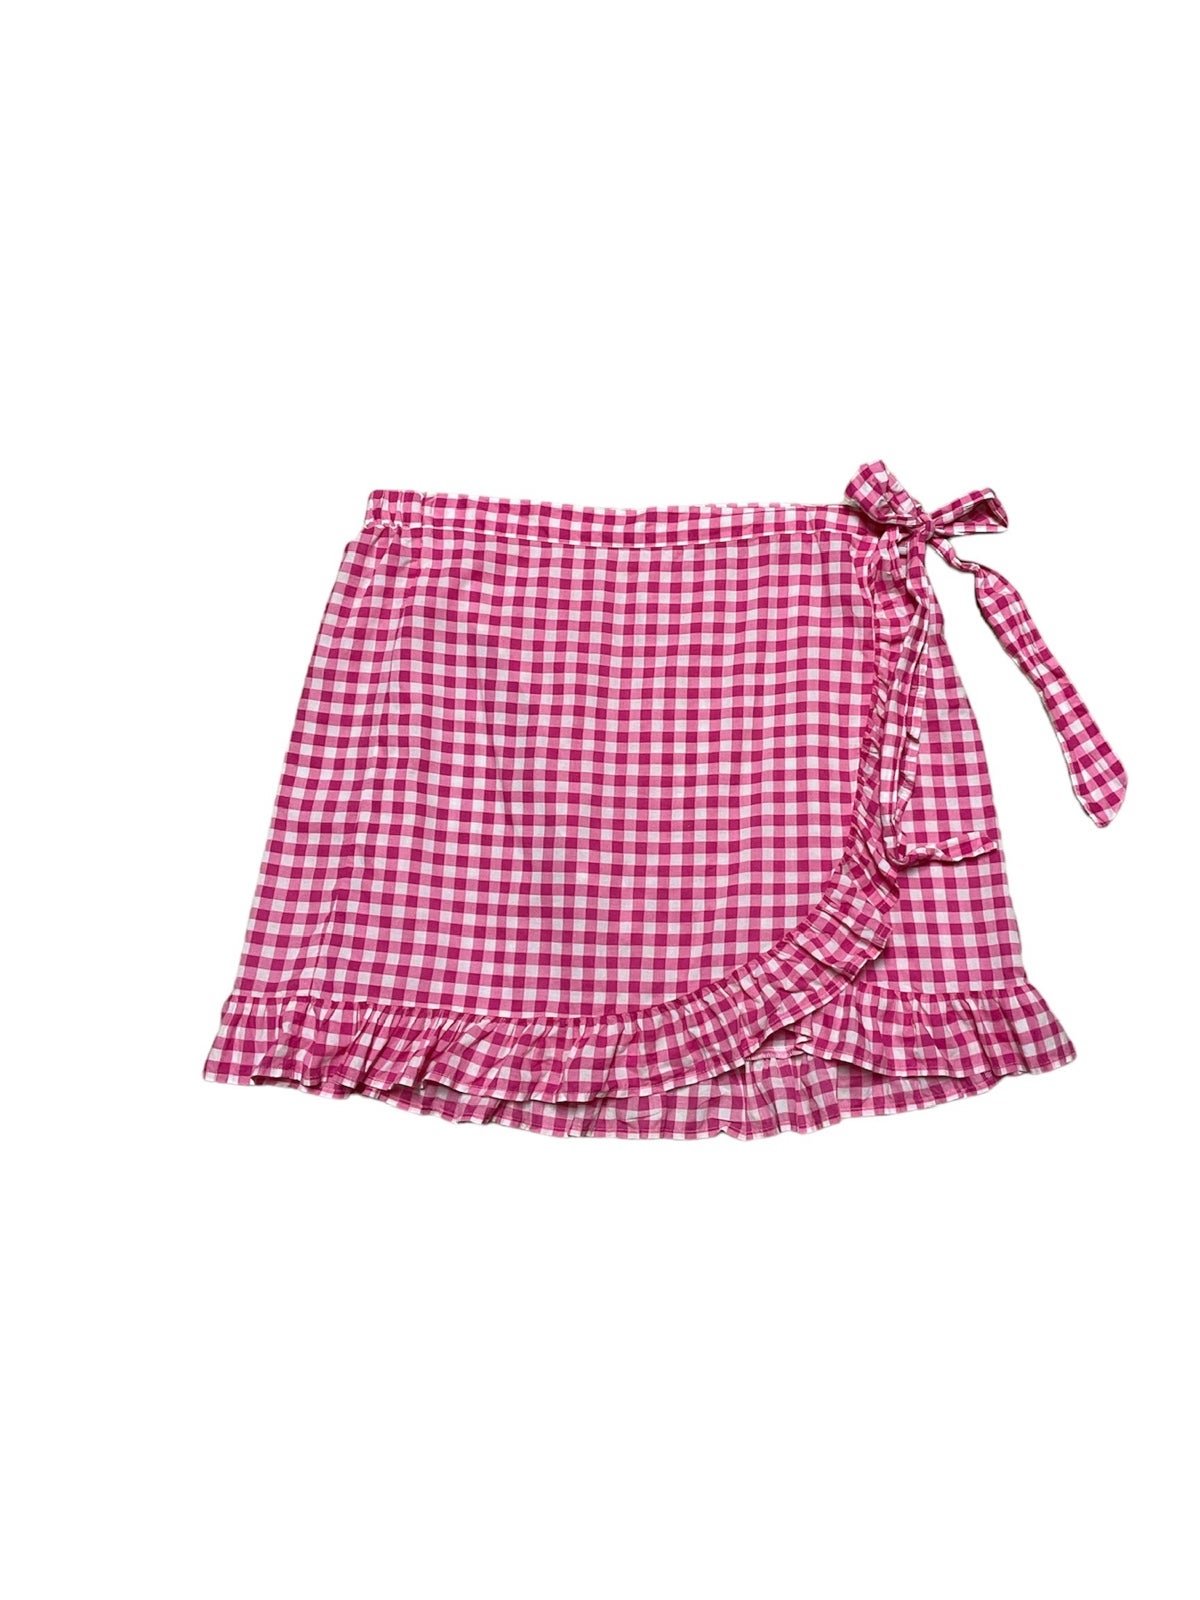 floor price J Crew Barbiecore Wrap Skirt Pink Gingham T